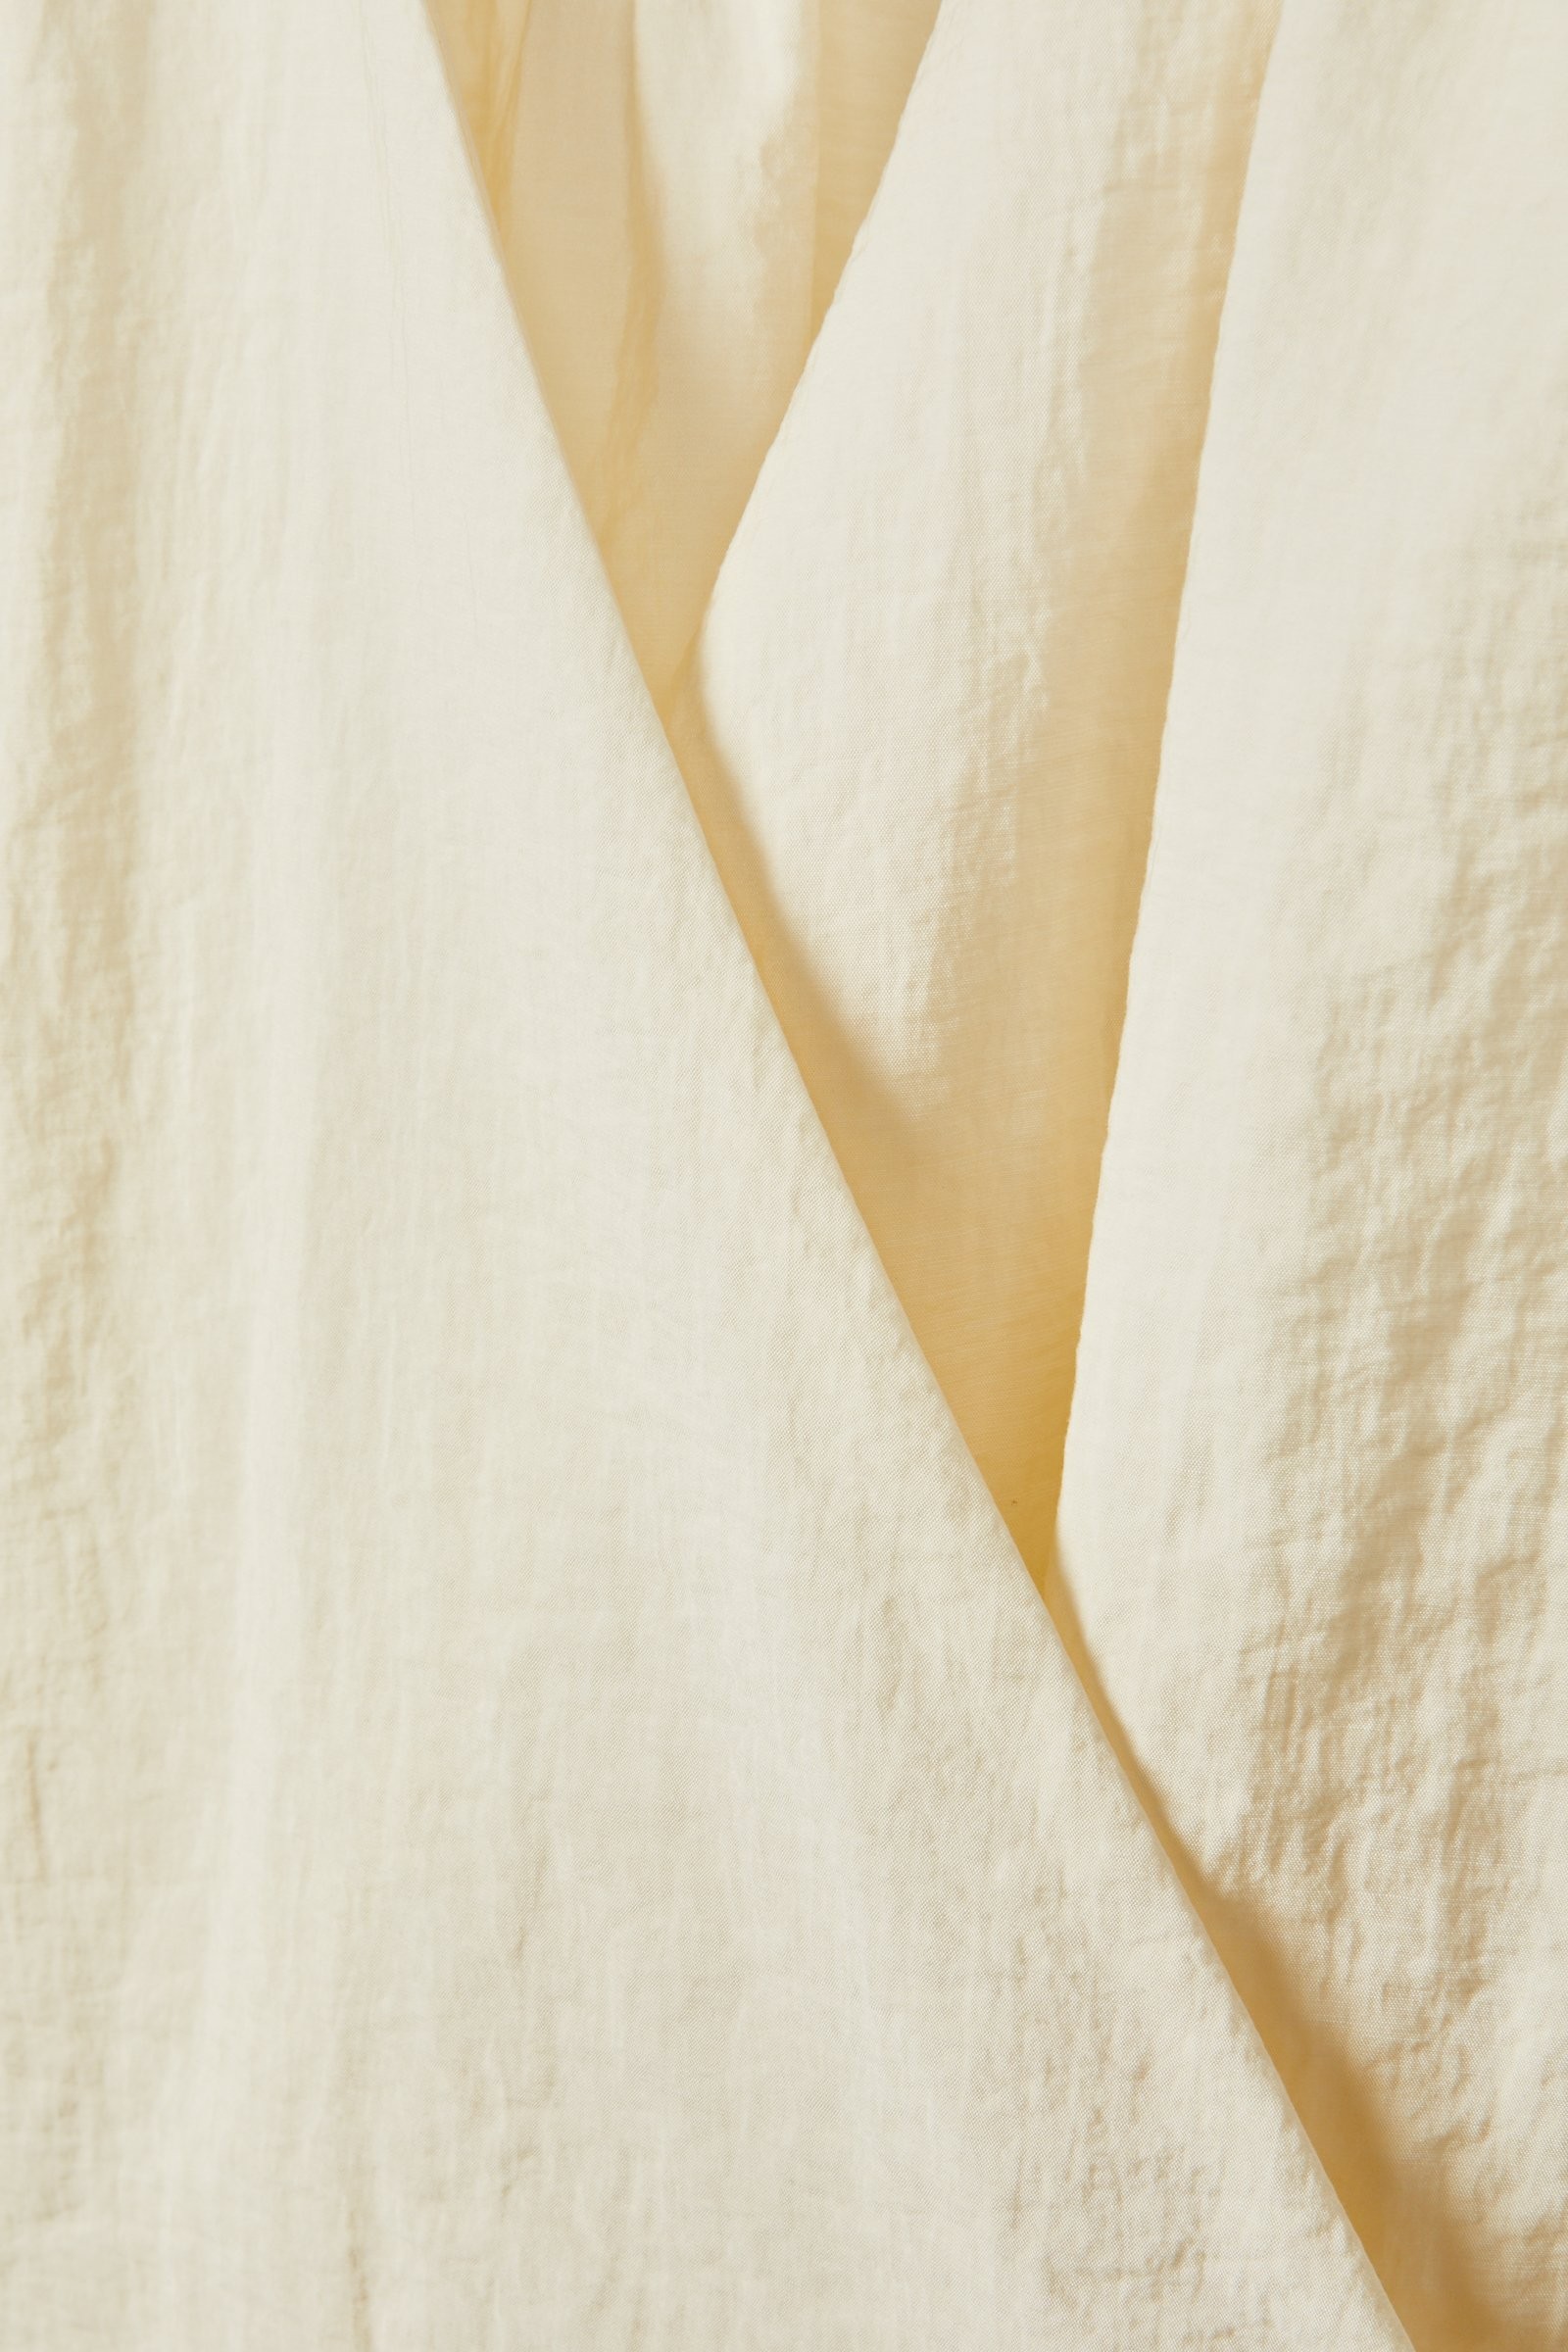 CKS Dames - IDIOMA - blouse long sleeves - white